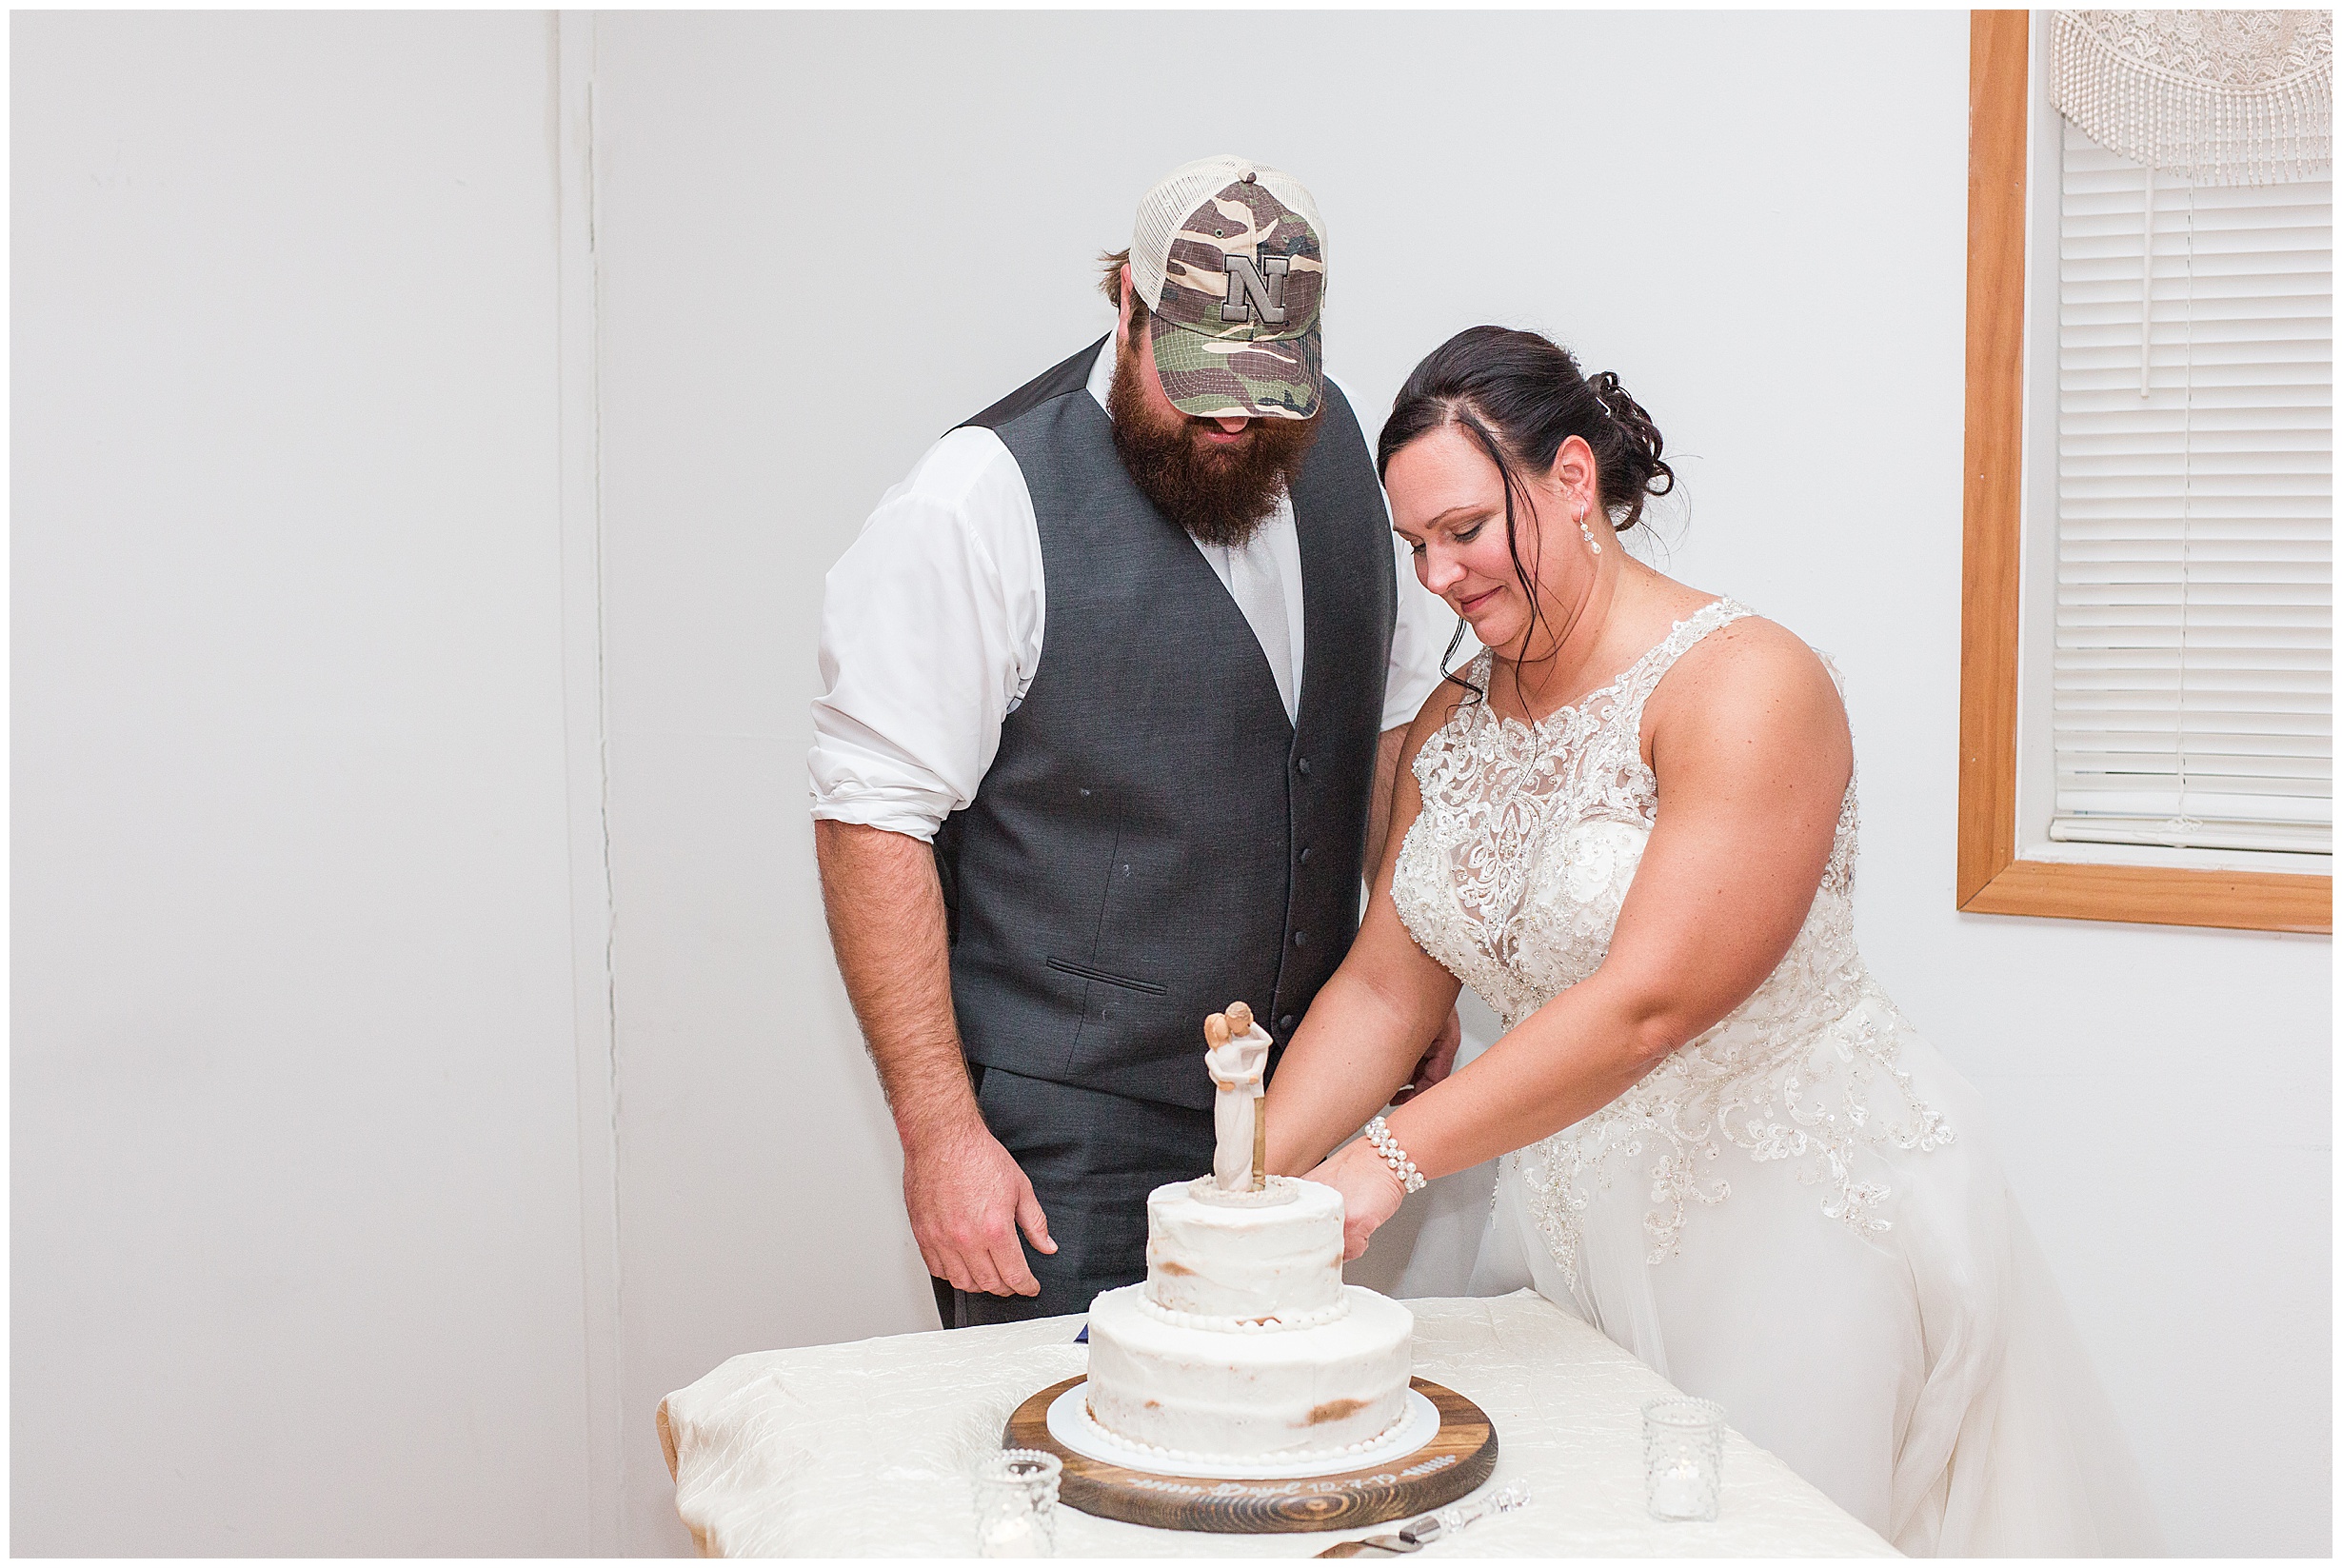 Iowa City Photographers - Decorah Wedding -Megan Snitker Photography_0181.jpg